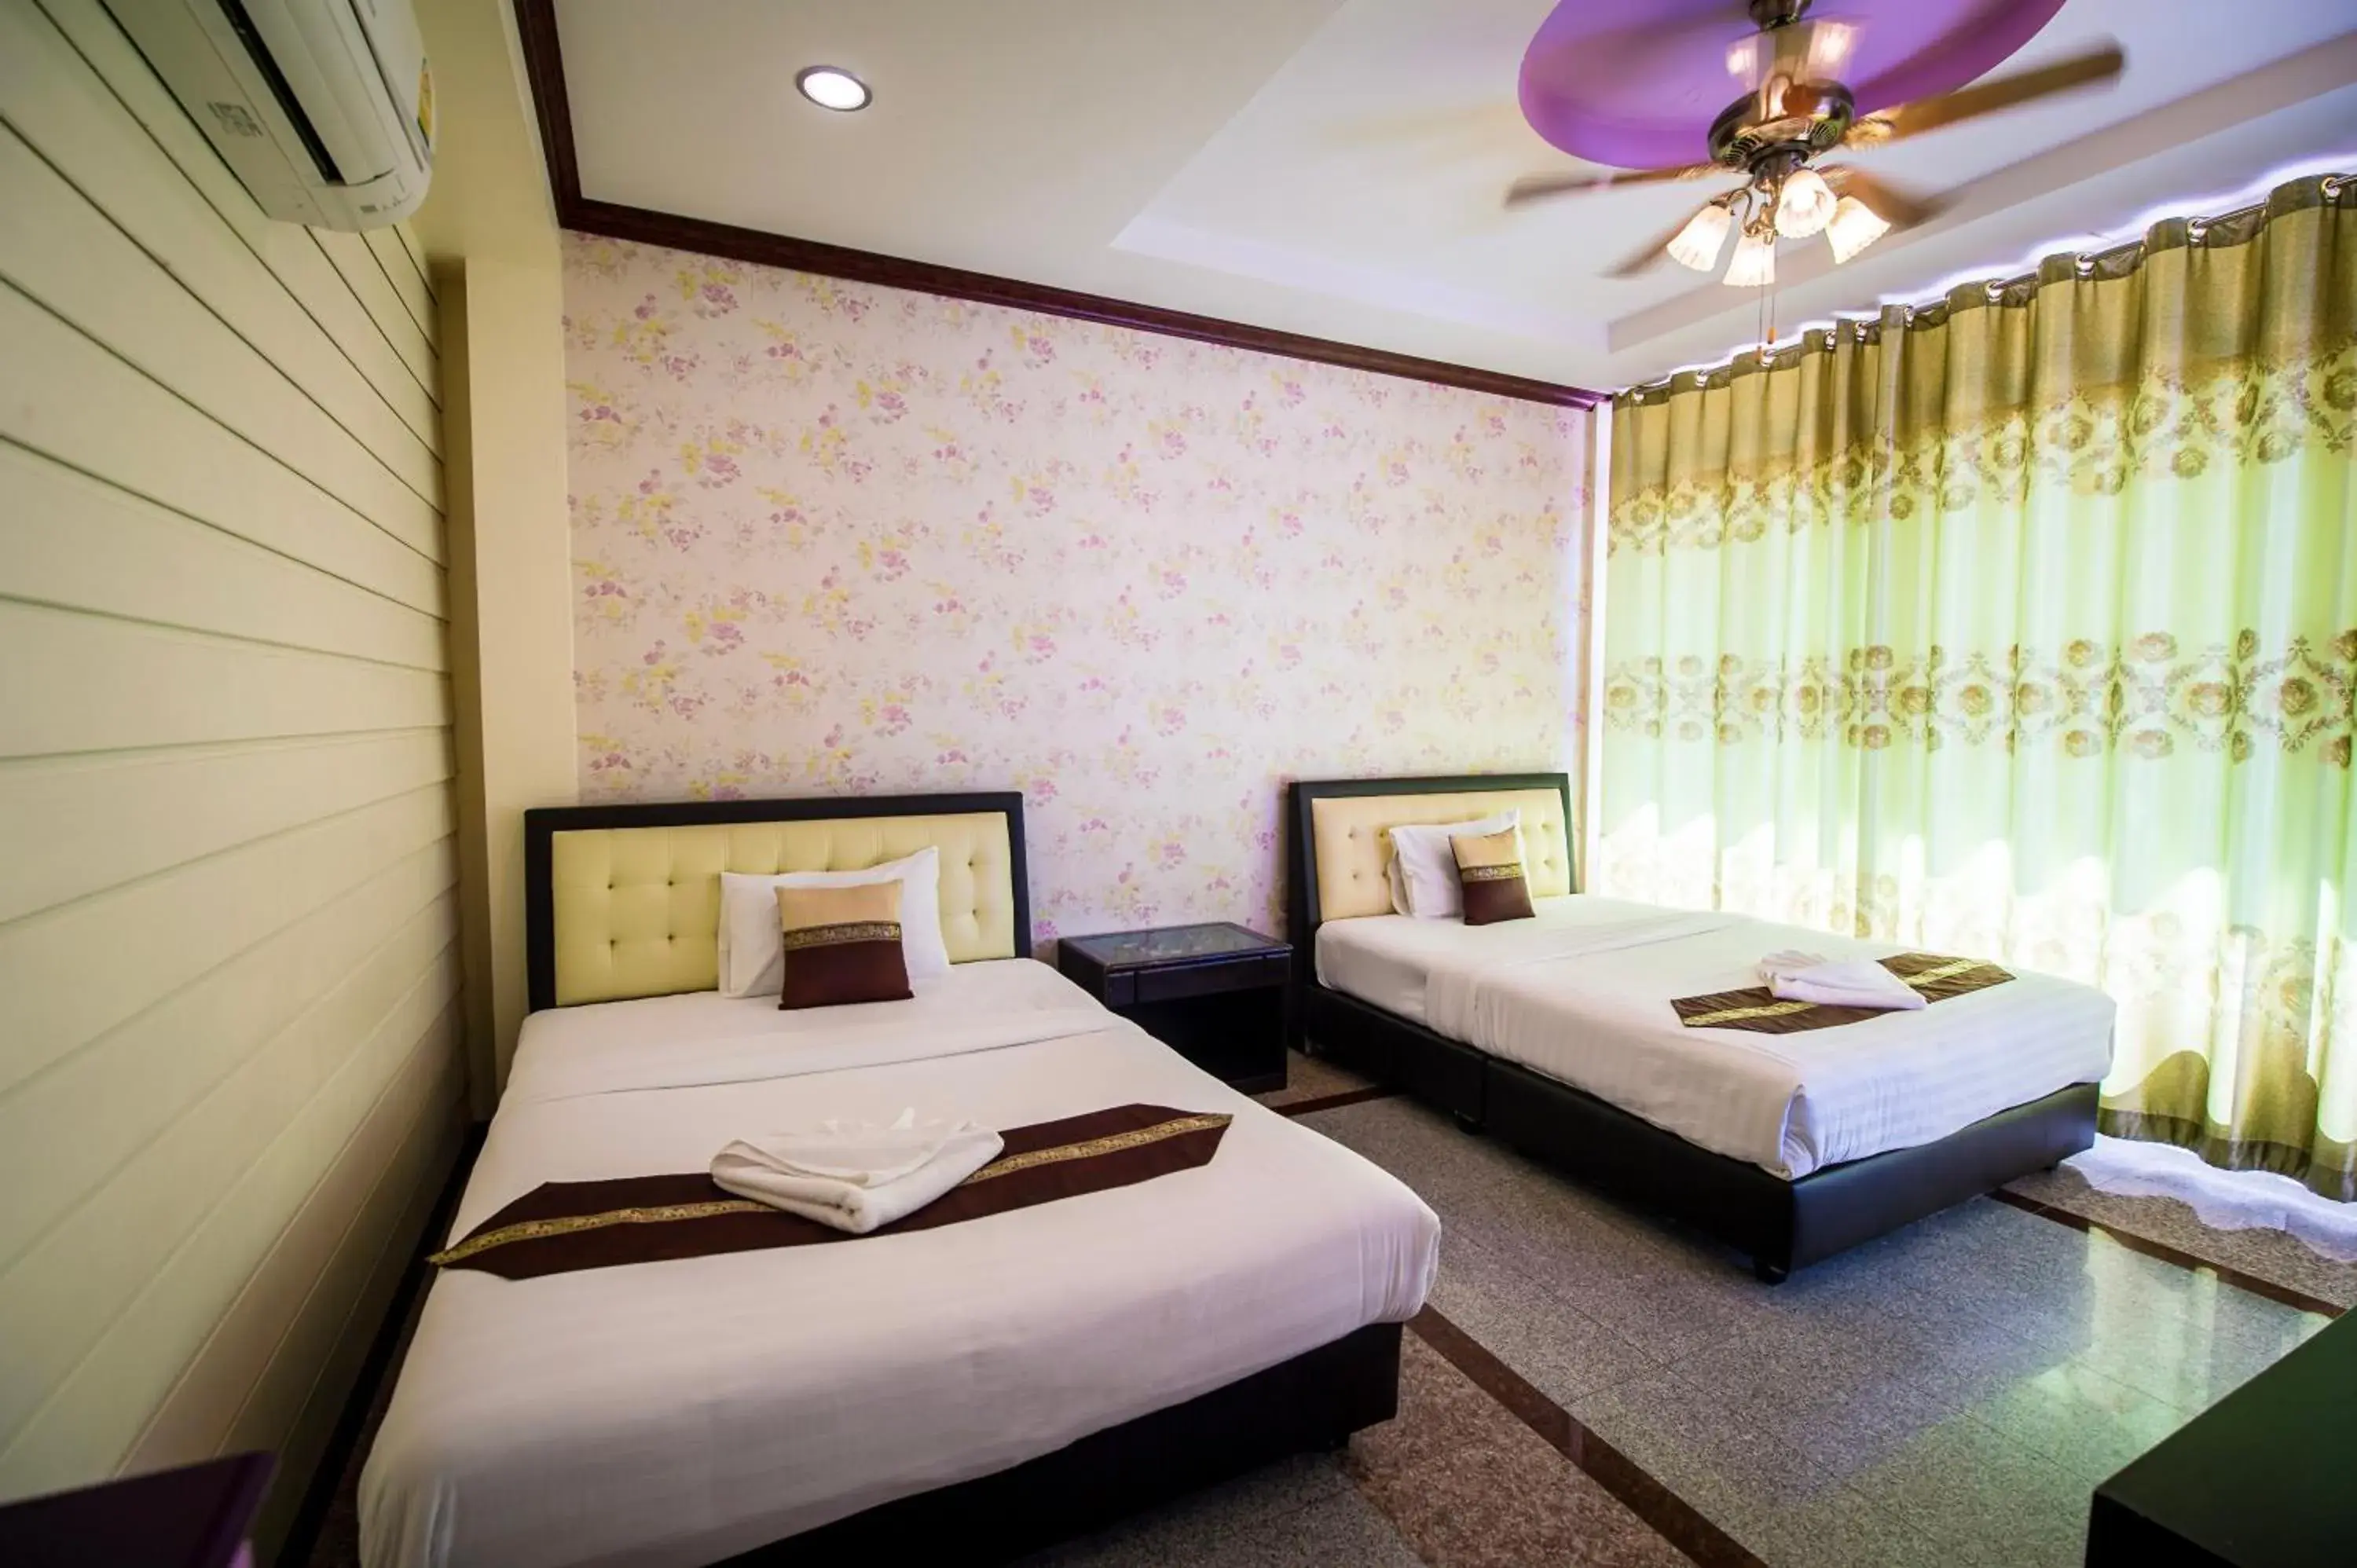 Bed in Dreampark resort